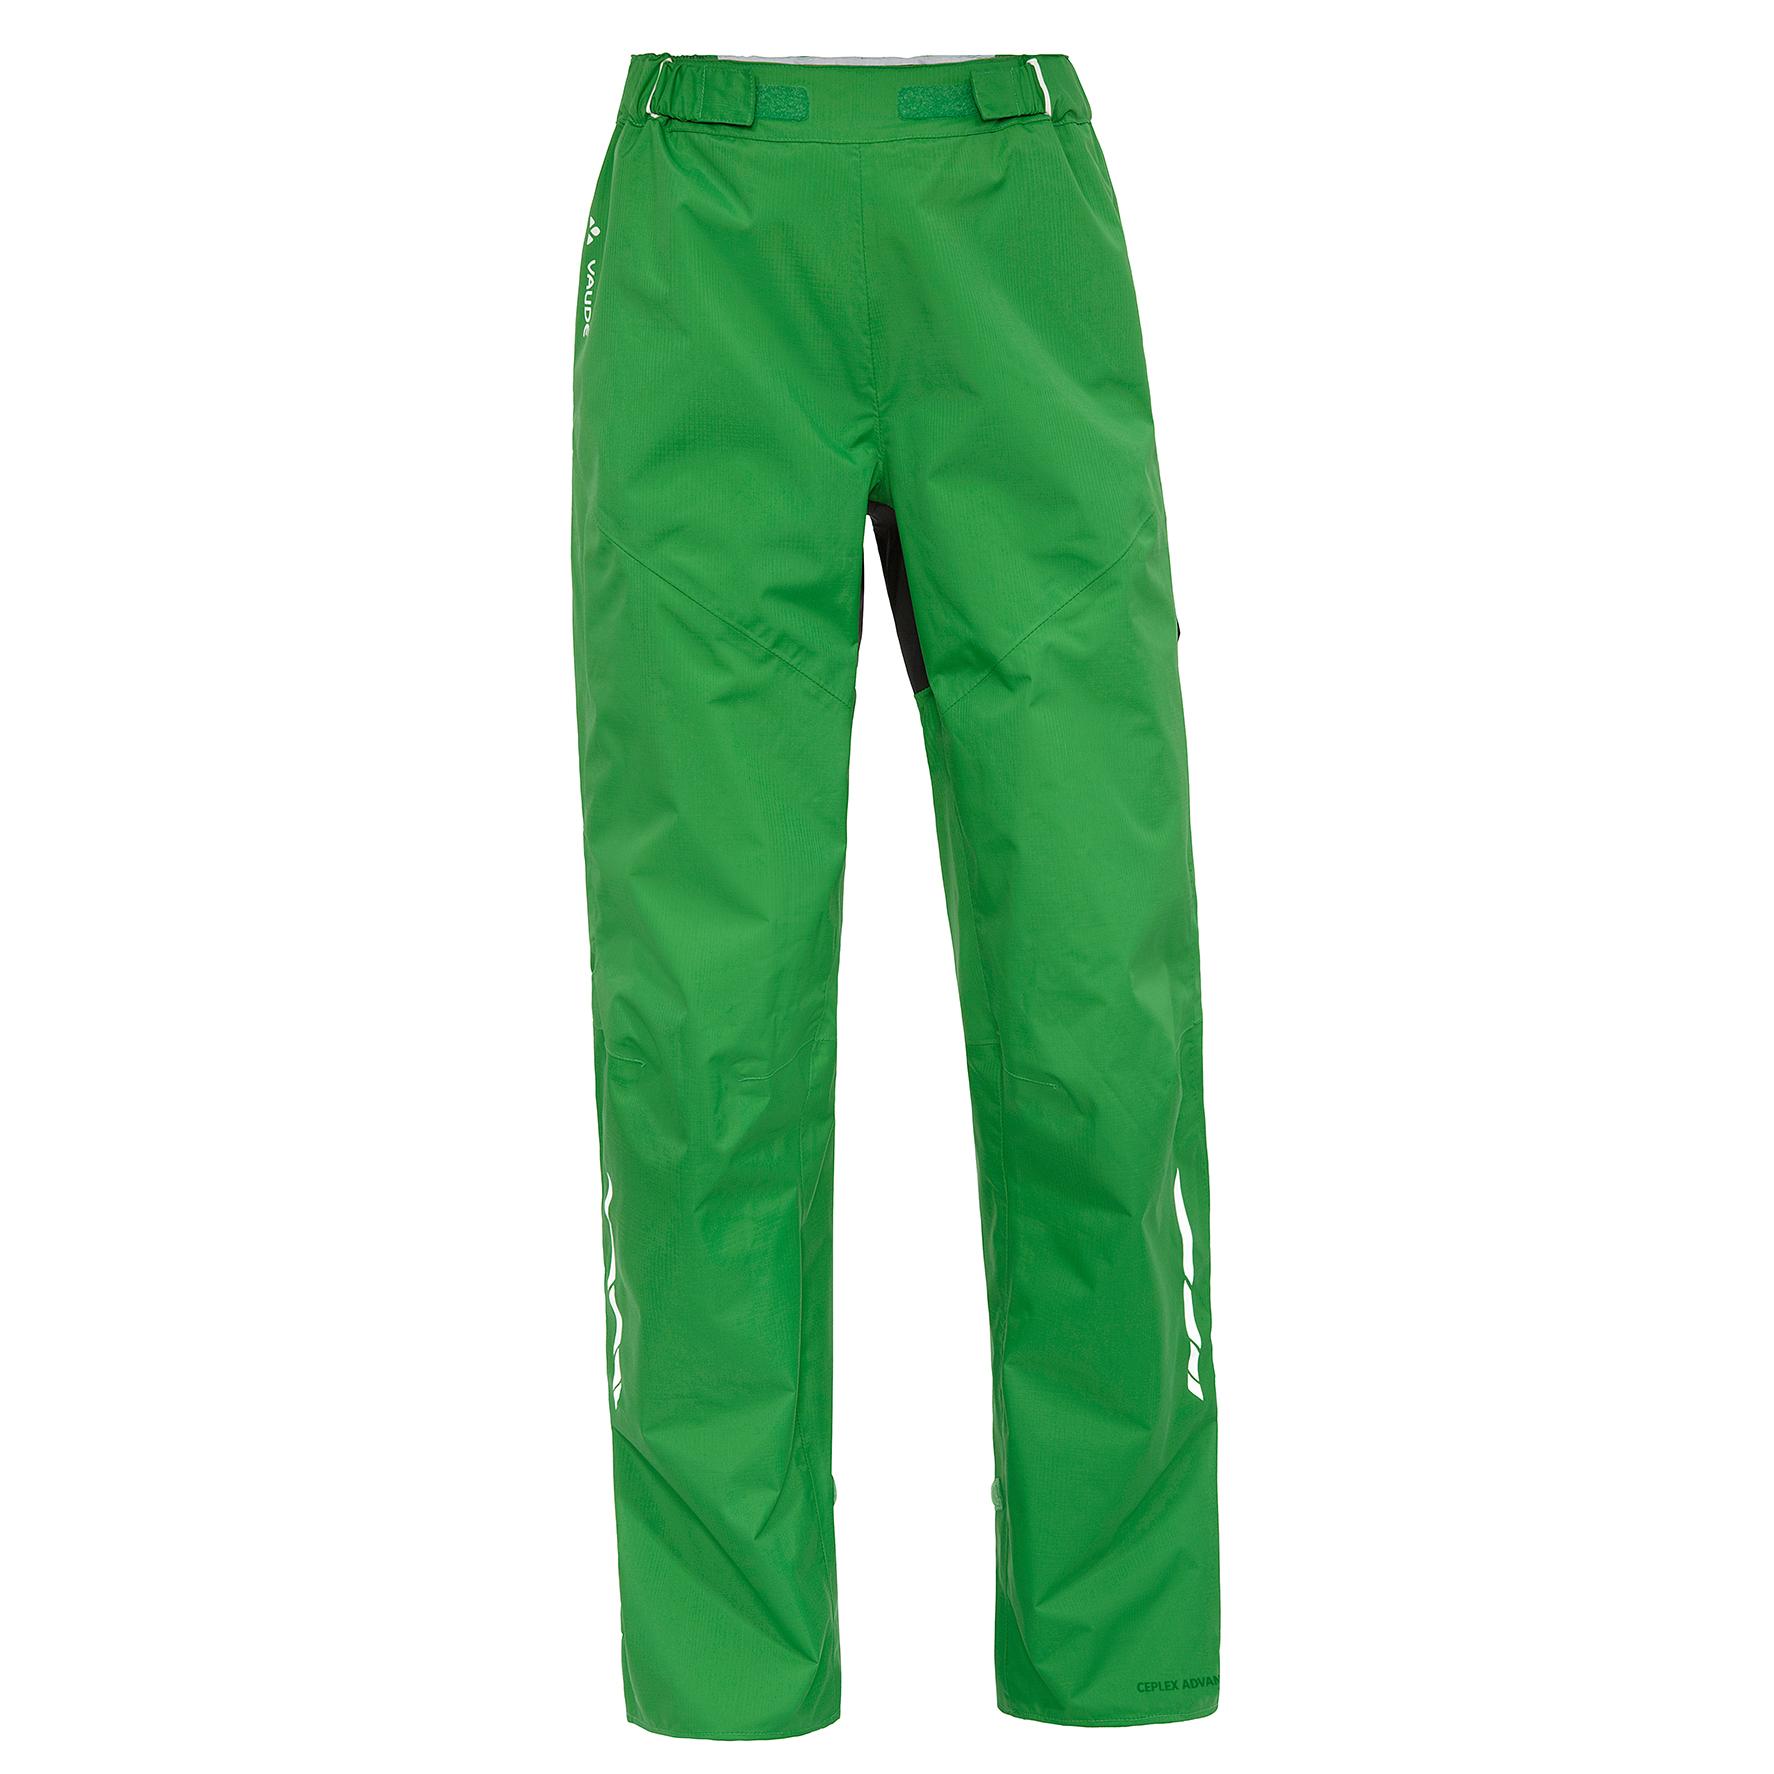 Foto Pantalones impermeables para ciclismo Vaude Tiak verde para muj, 42